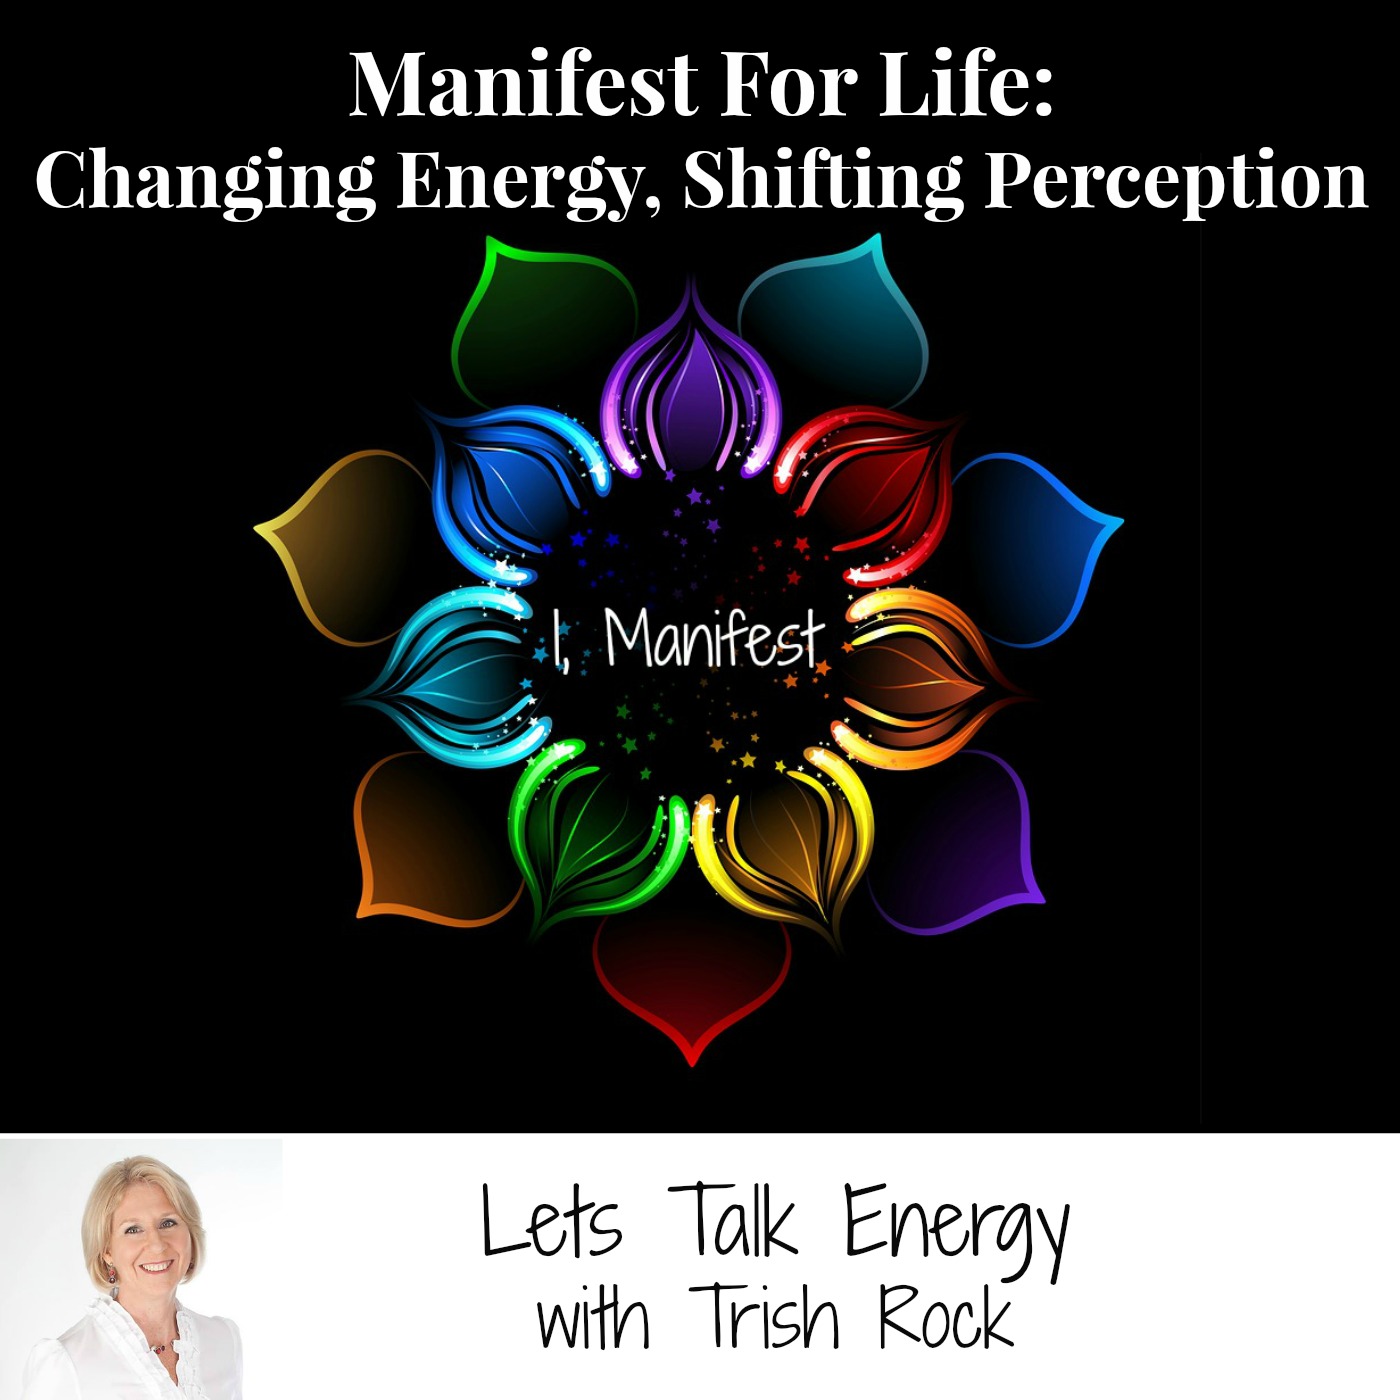 Manifest For Life: Lets Talk Energy